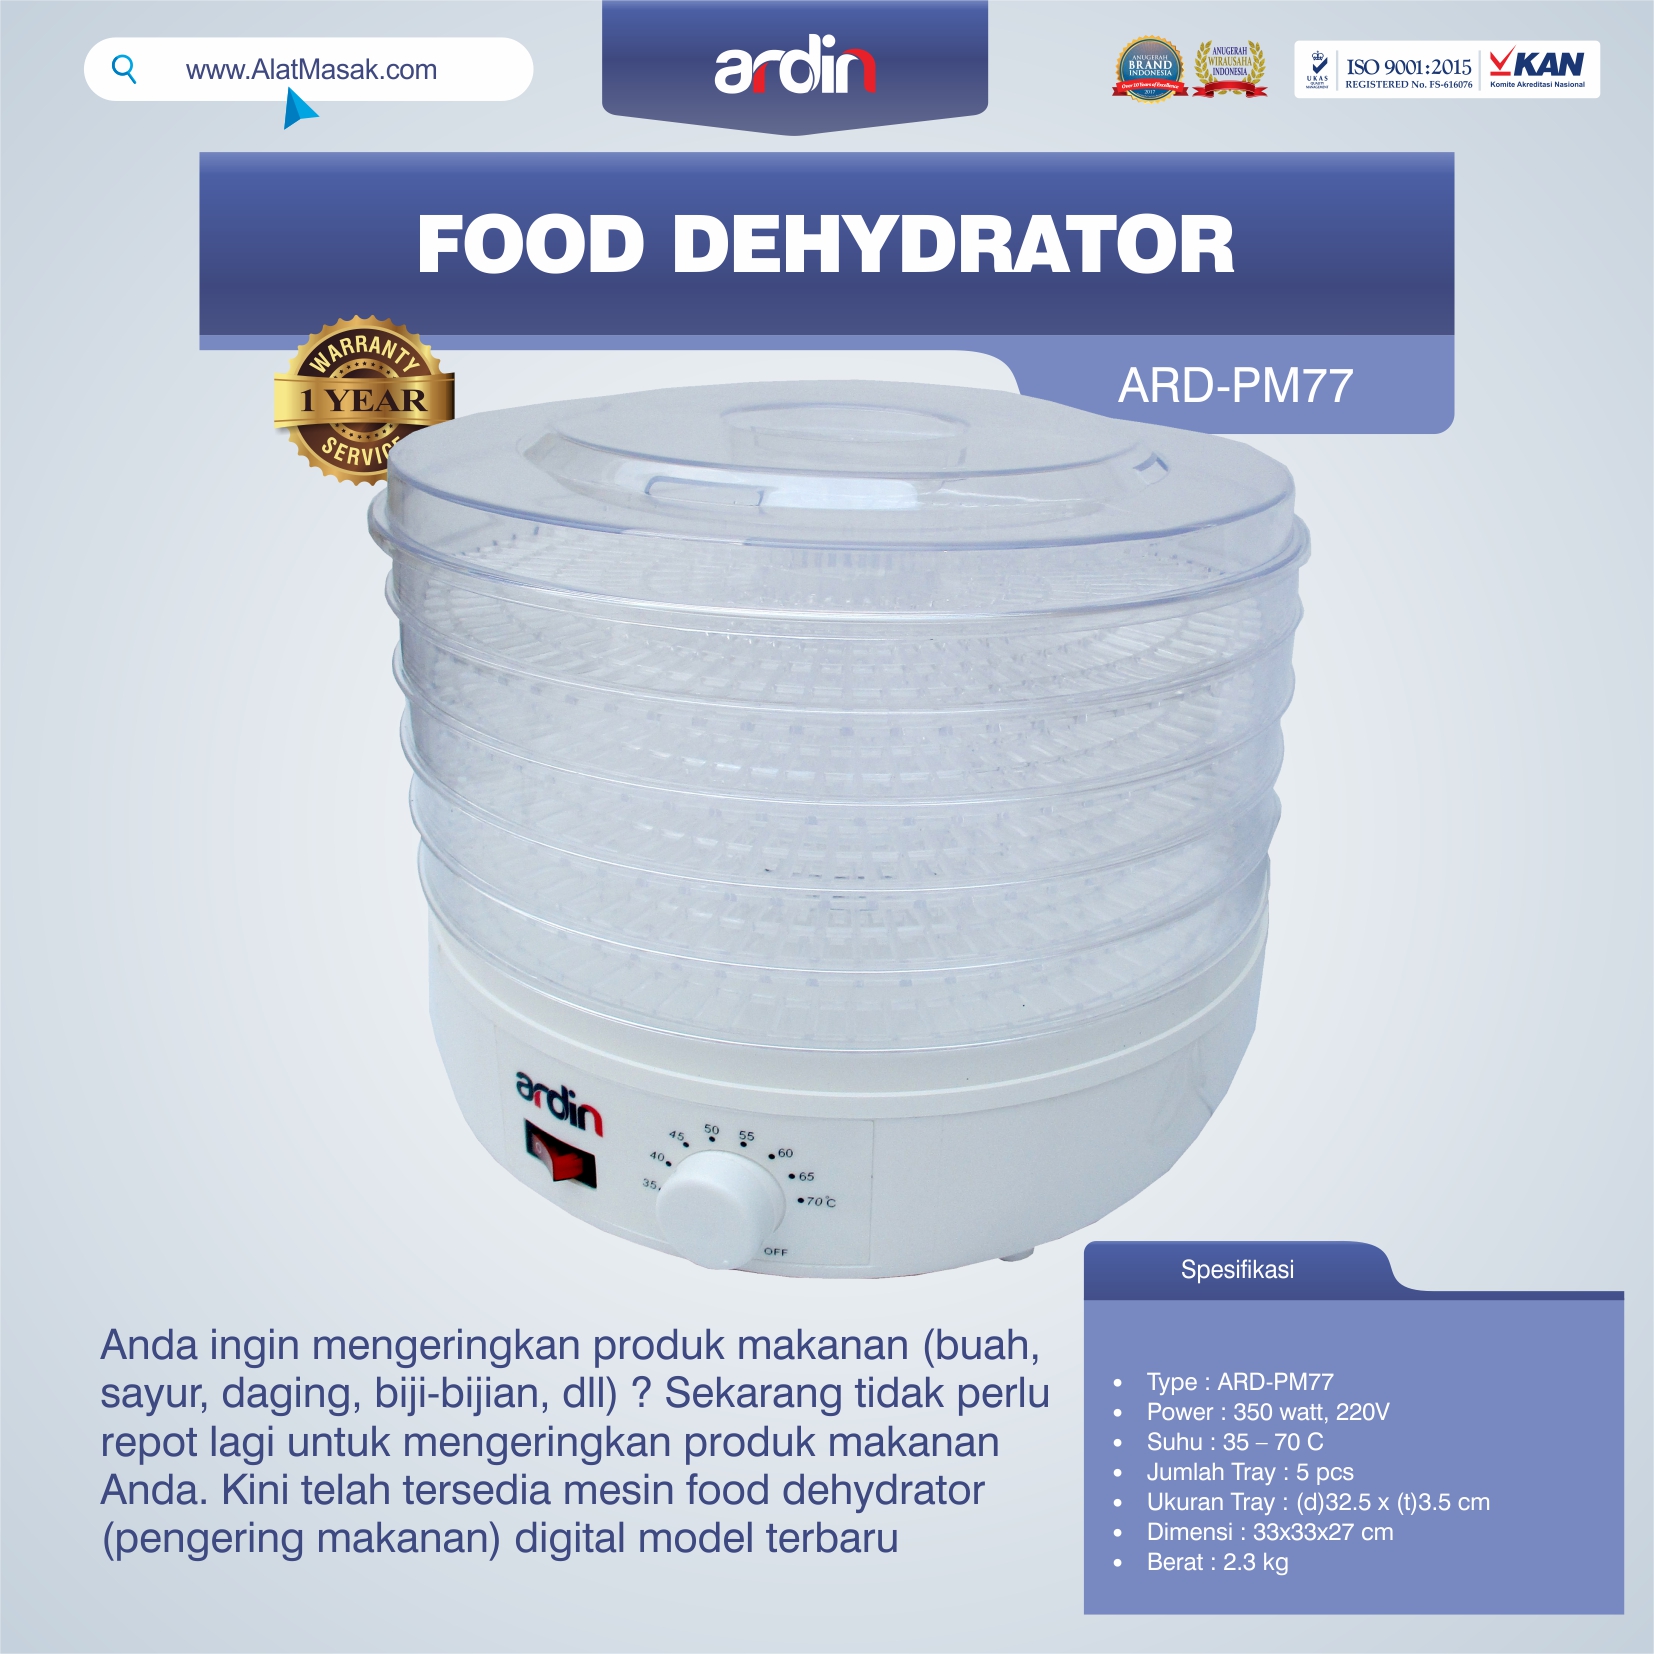 Jual Food Dehydrator ARD-PM77 di Malang